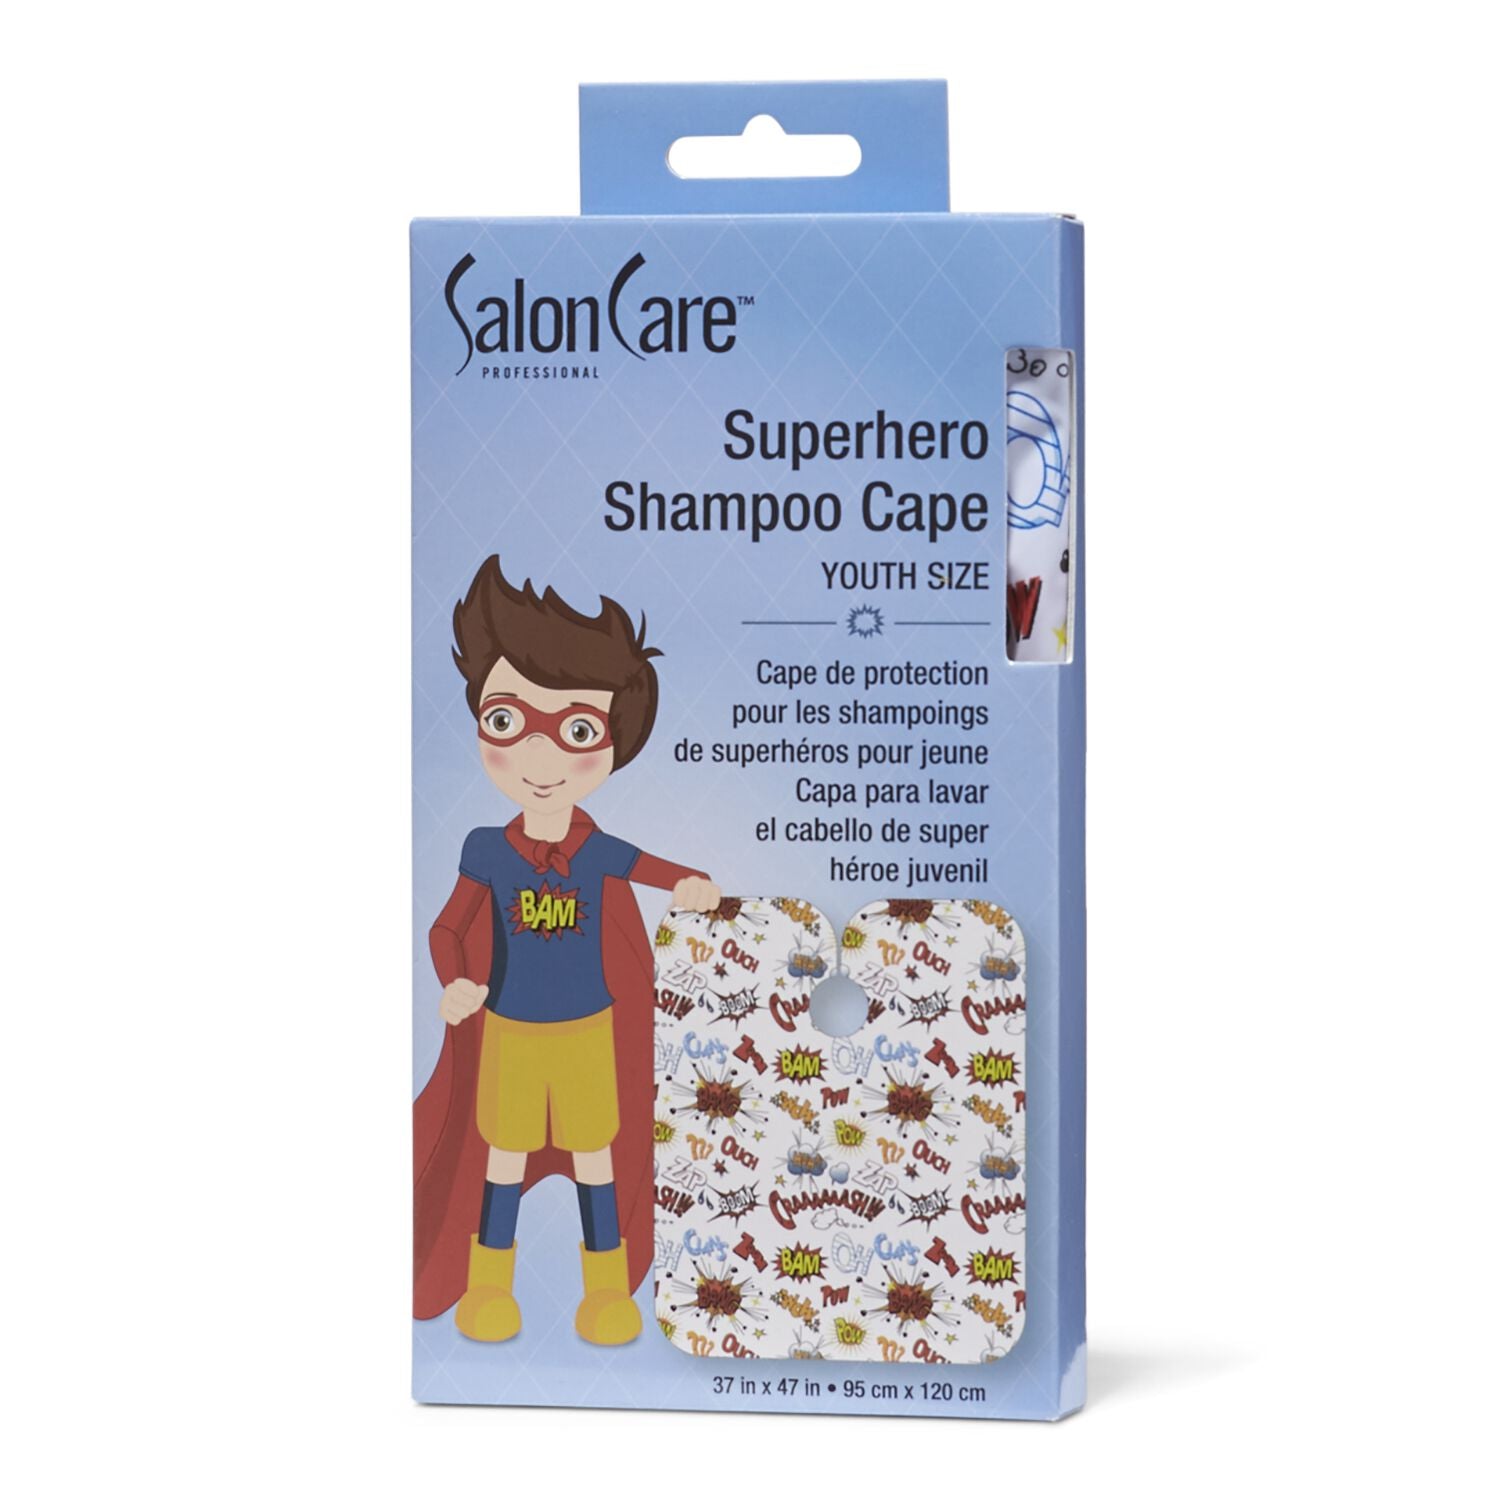 Salon Care Superhero Shampoo Cape